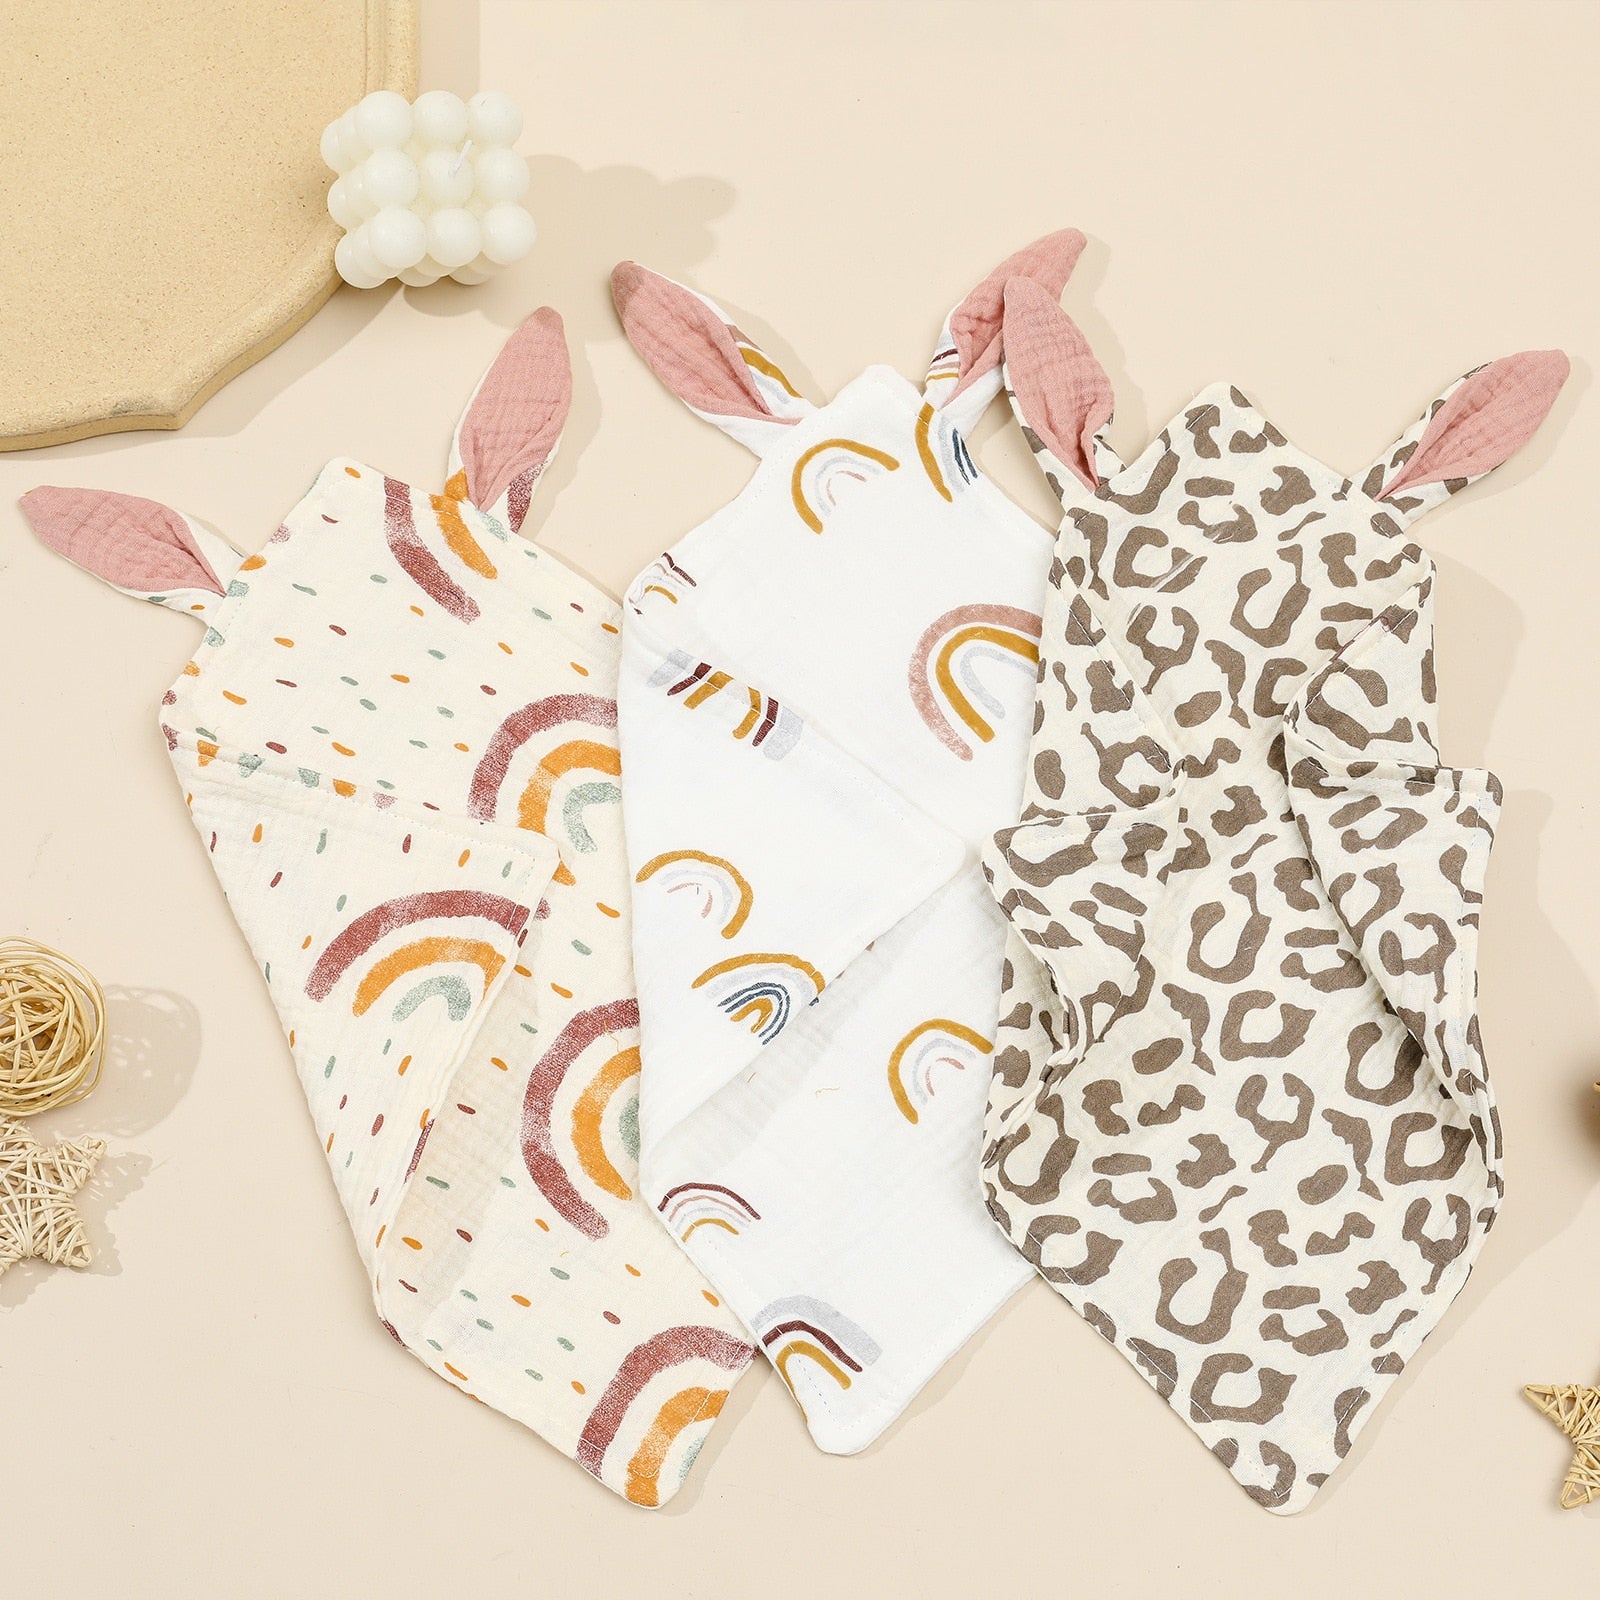 Newborn Baby Rabbit Cotton Muslin Comforter Sleeping Dolls Blanket Soft Soothe Appease Towel for Baby Bibs Burp Cloths Infant